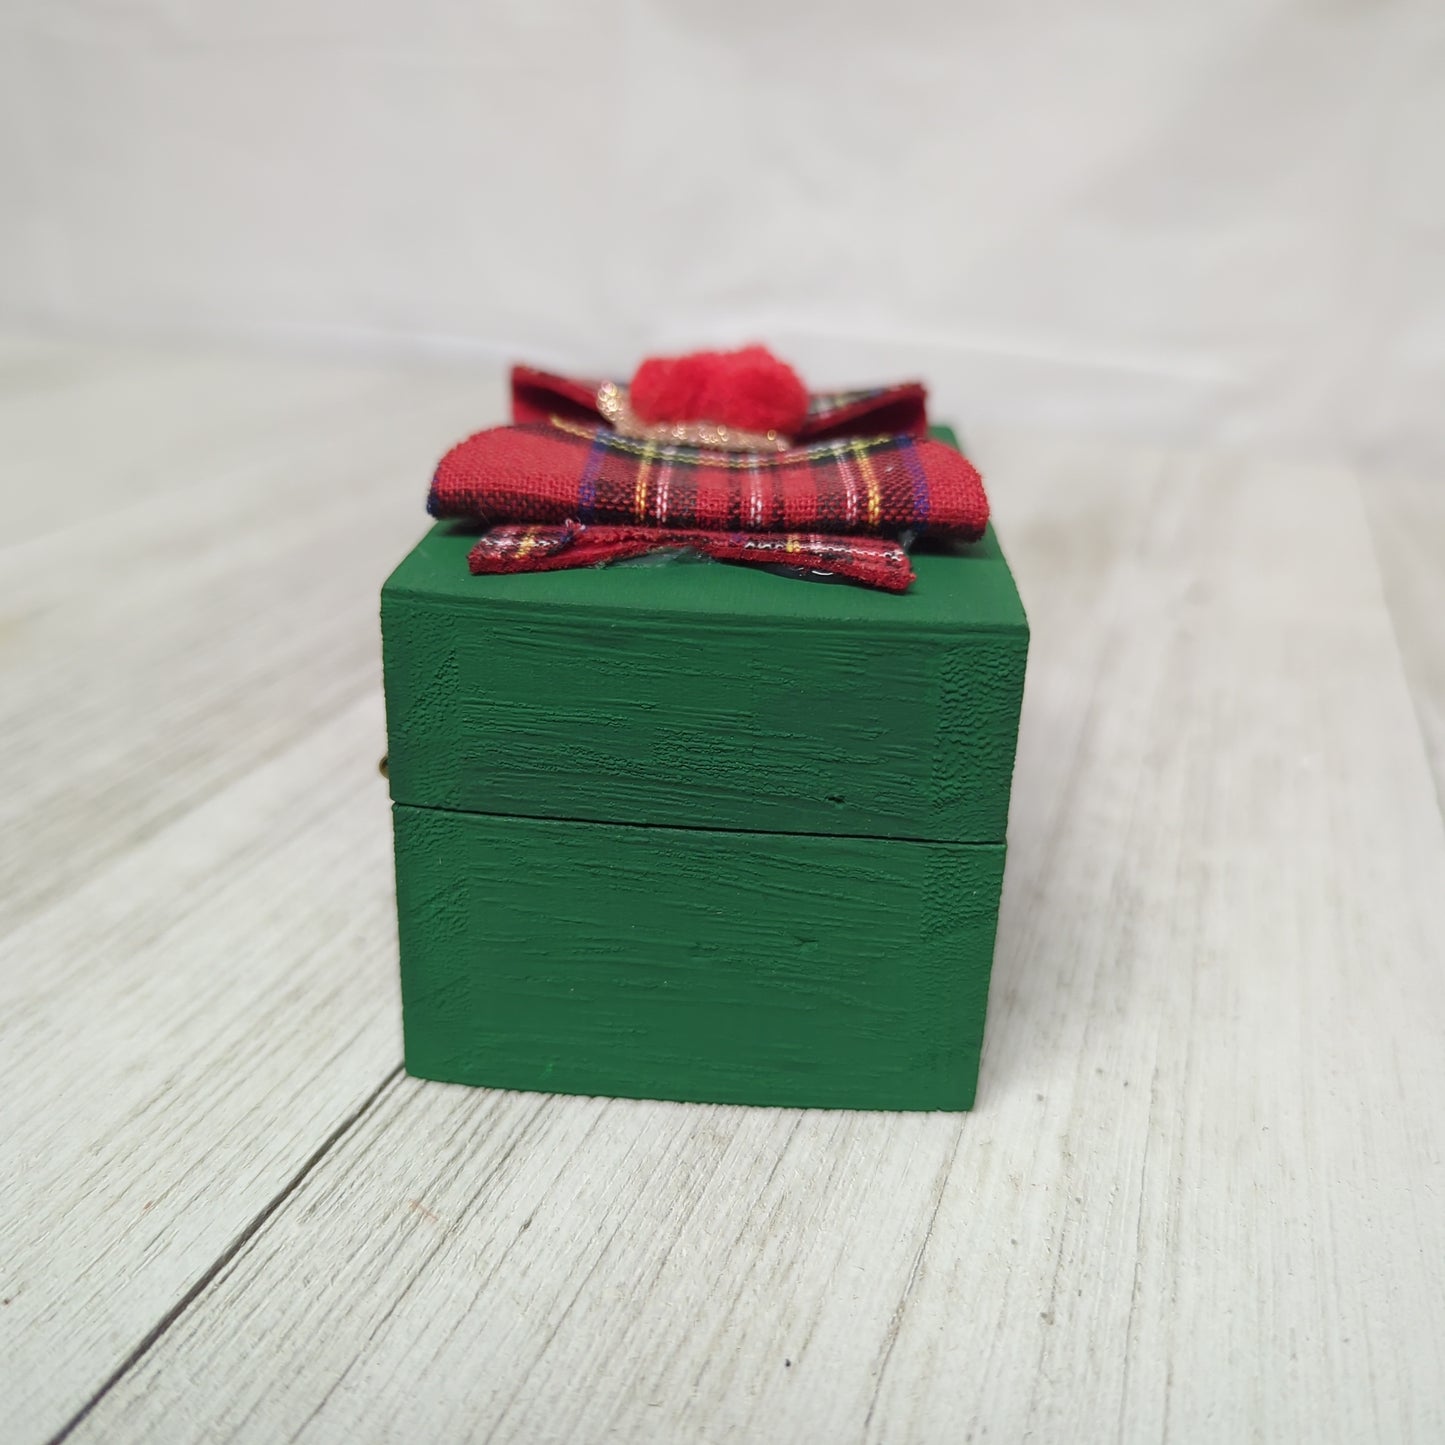 A Miniature Christmas Trunk